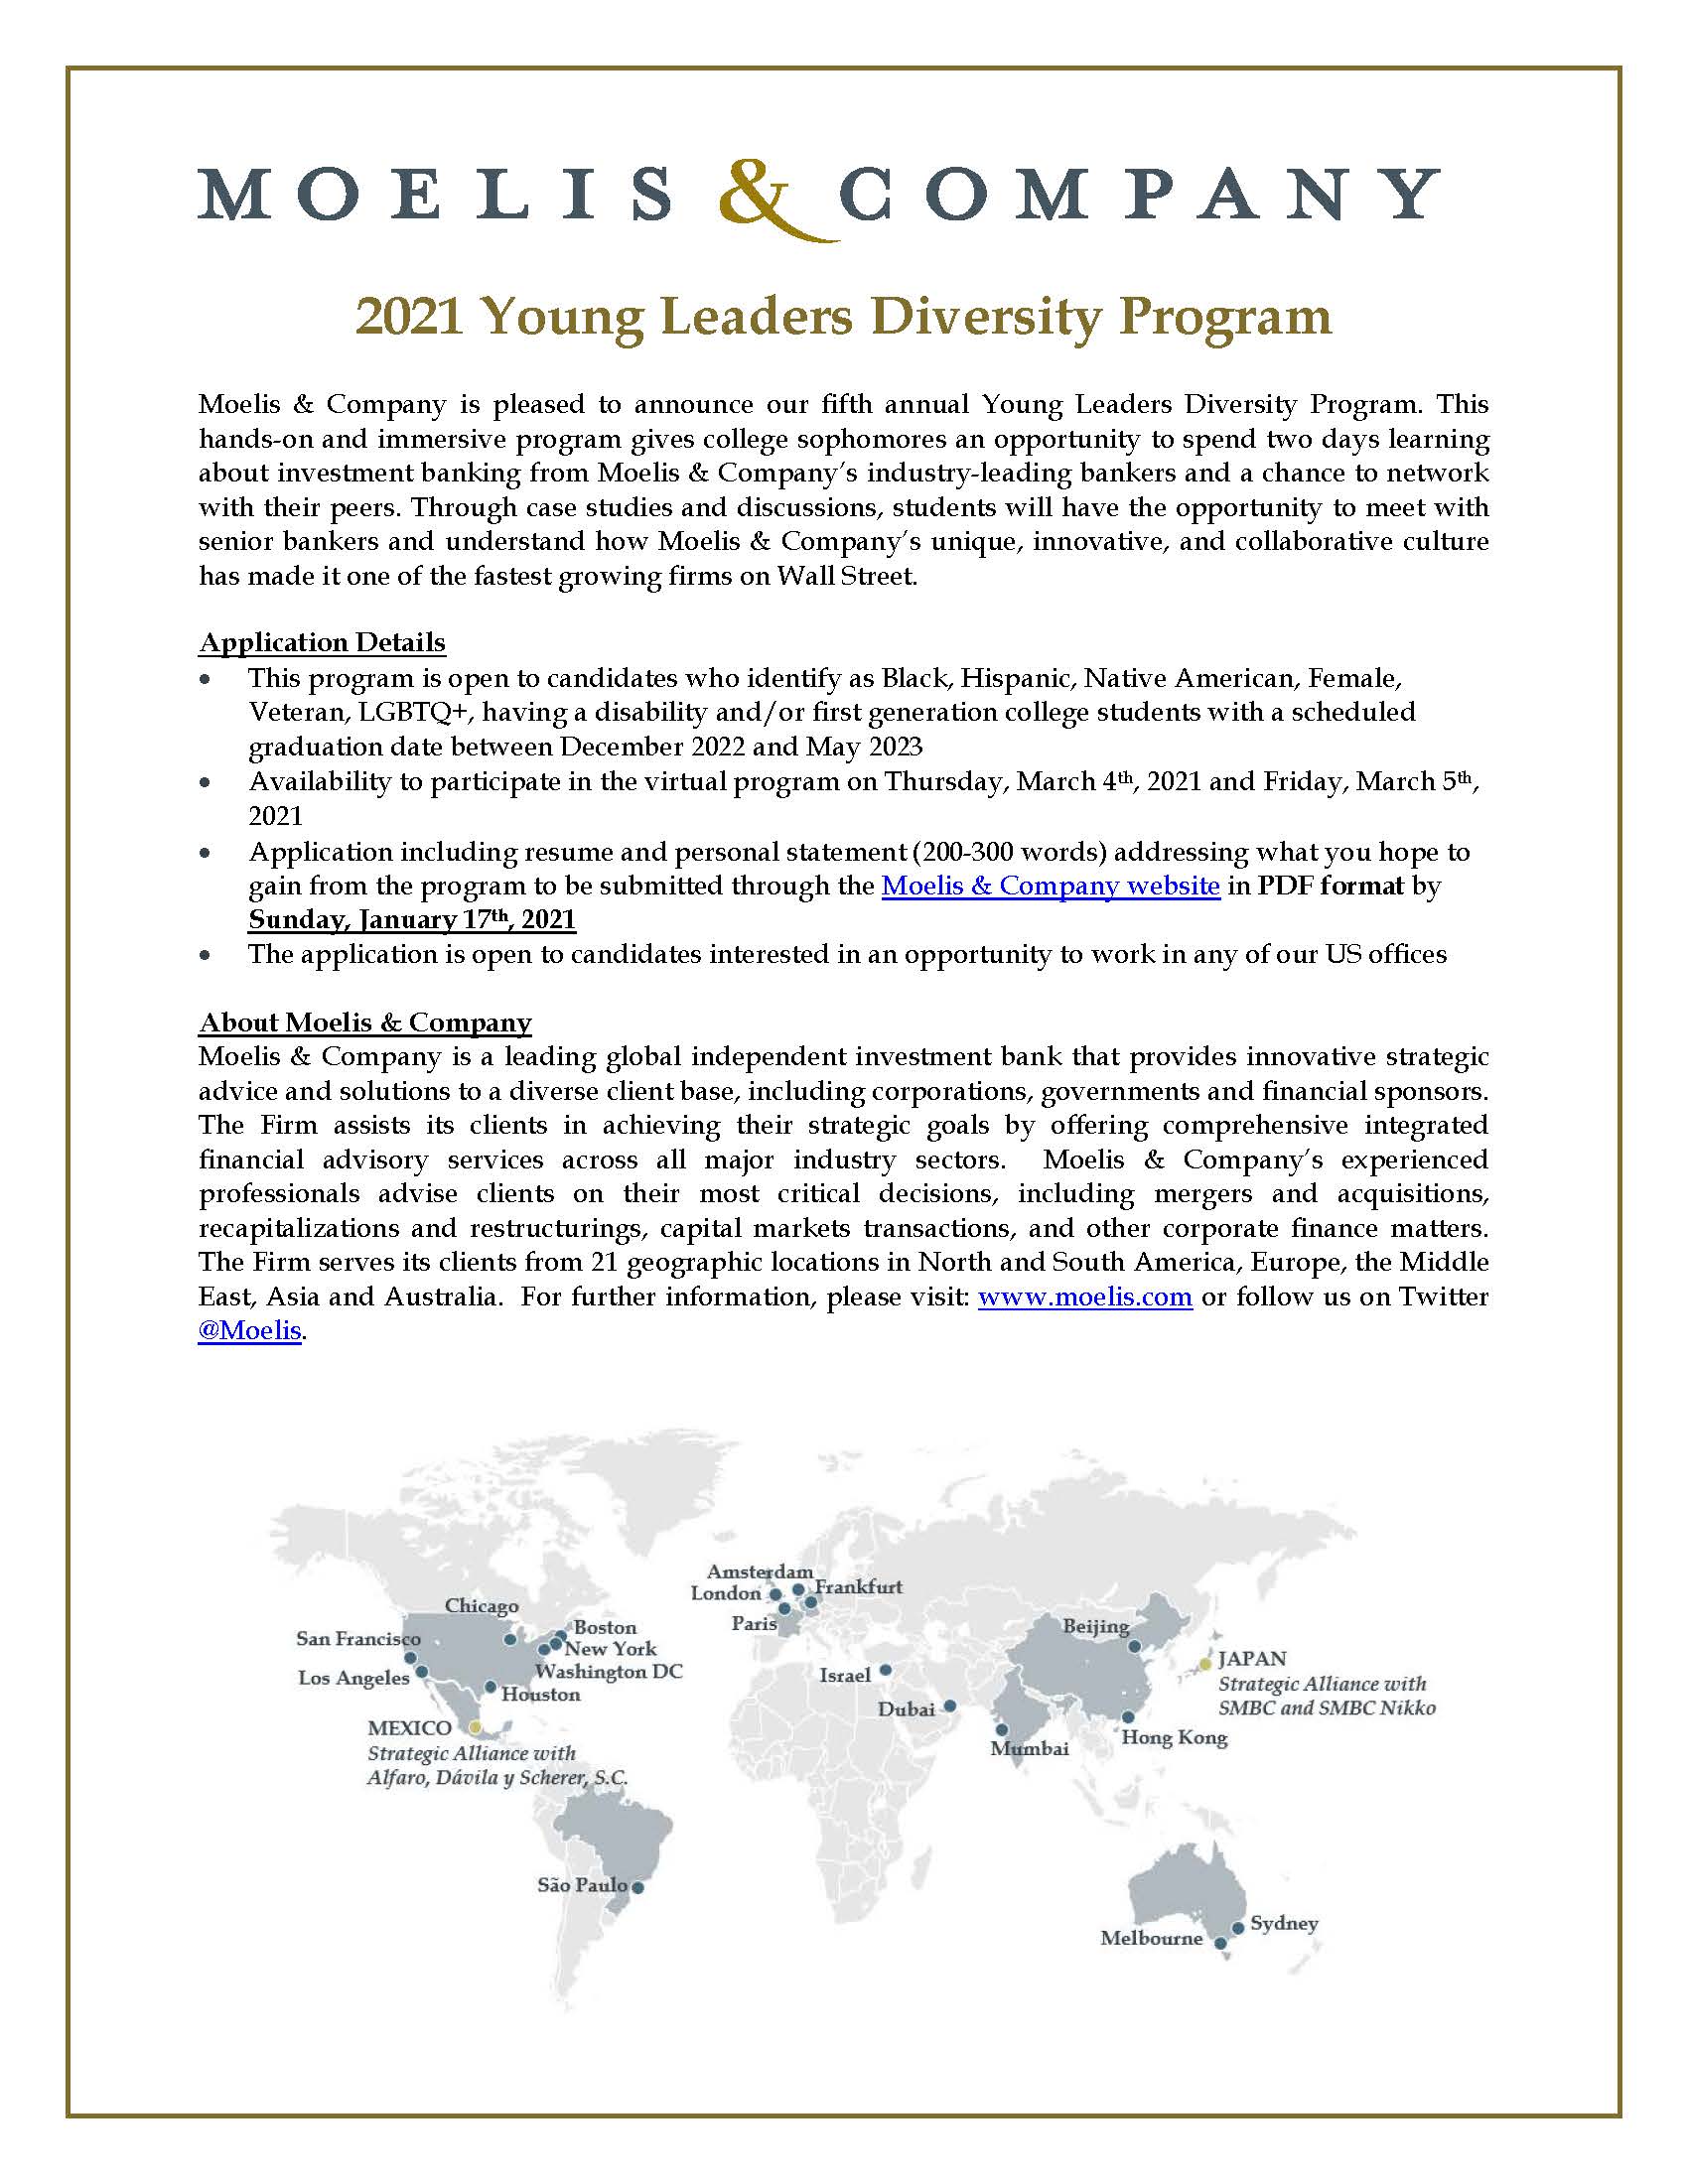 Moelis & Company Young Leaders Diversity Program; deadline to apply 17 January 2021